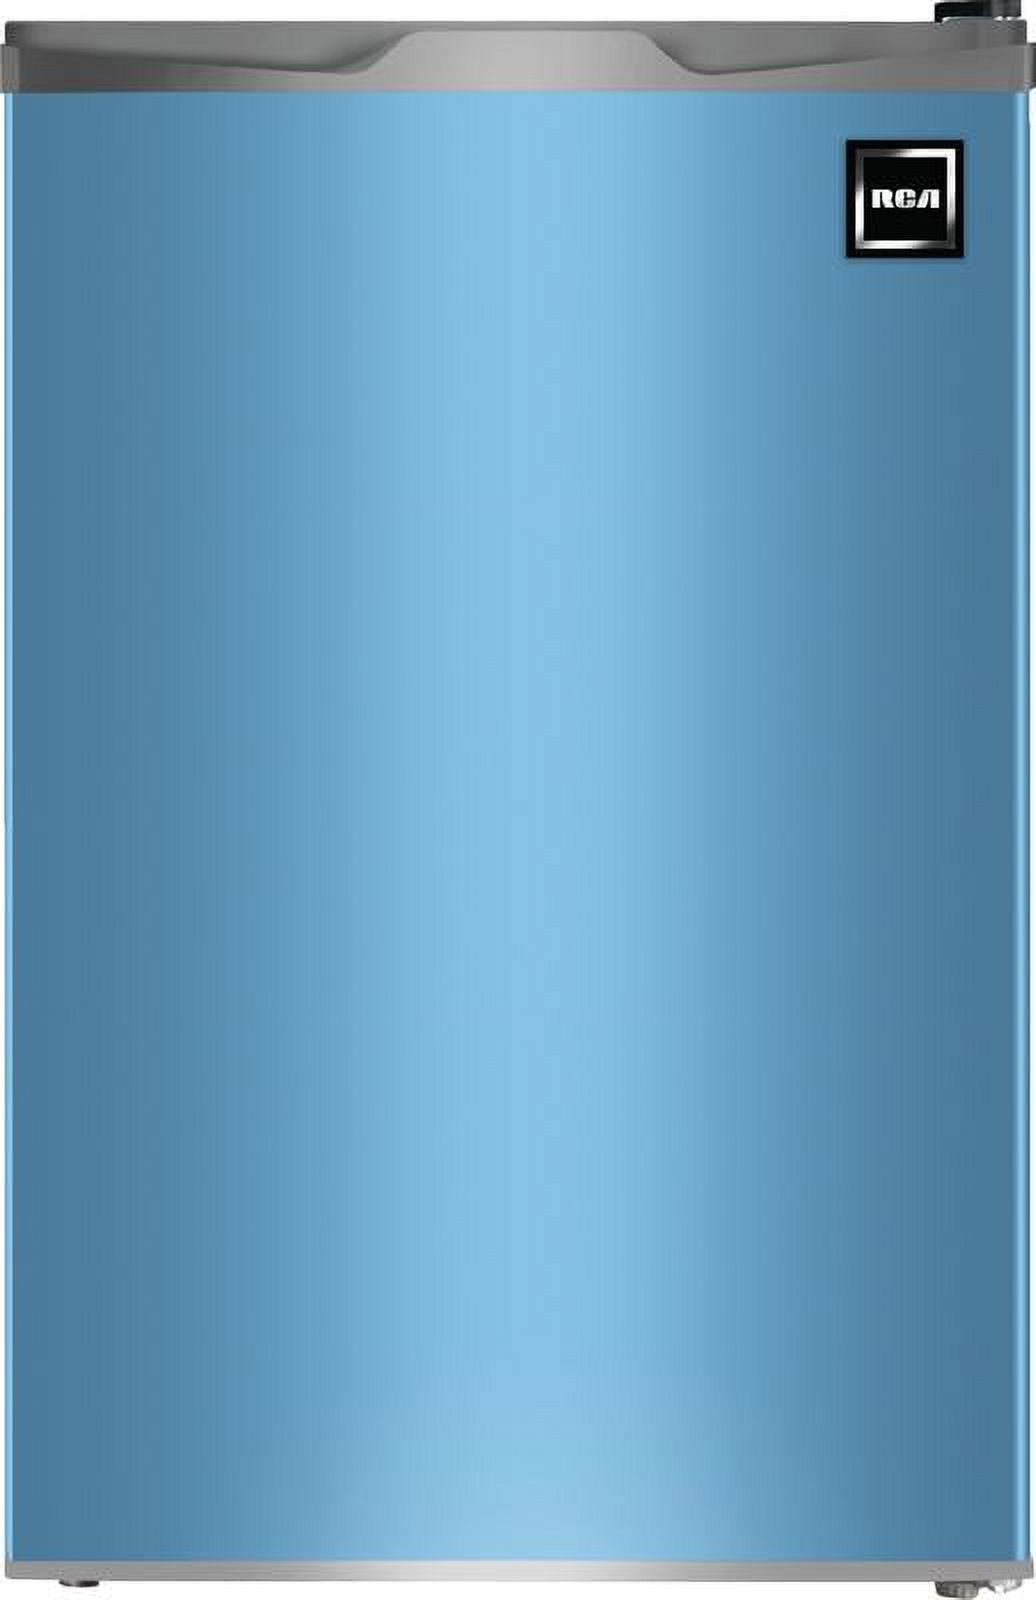 RCA 3.2 Cu. Ft. Single Door Compact Refrigerator RFR320, Blue - image 4 of 5